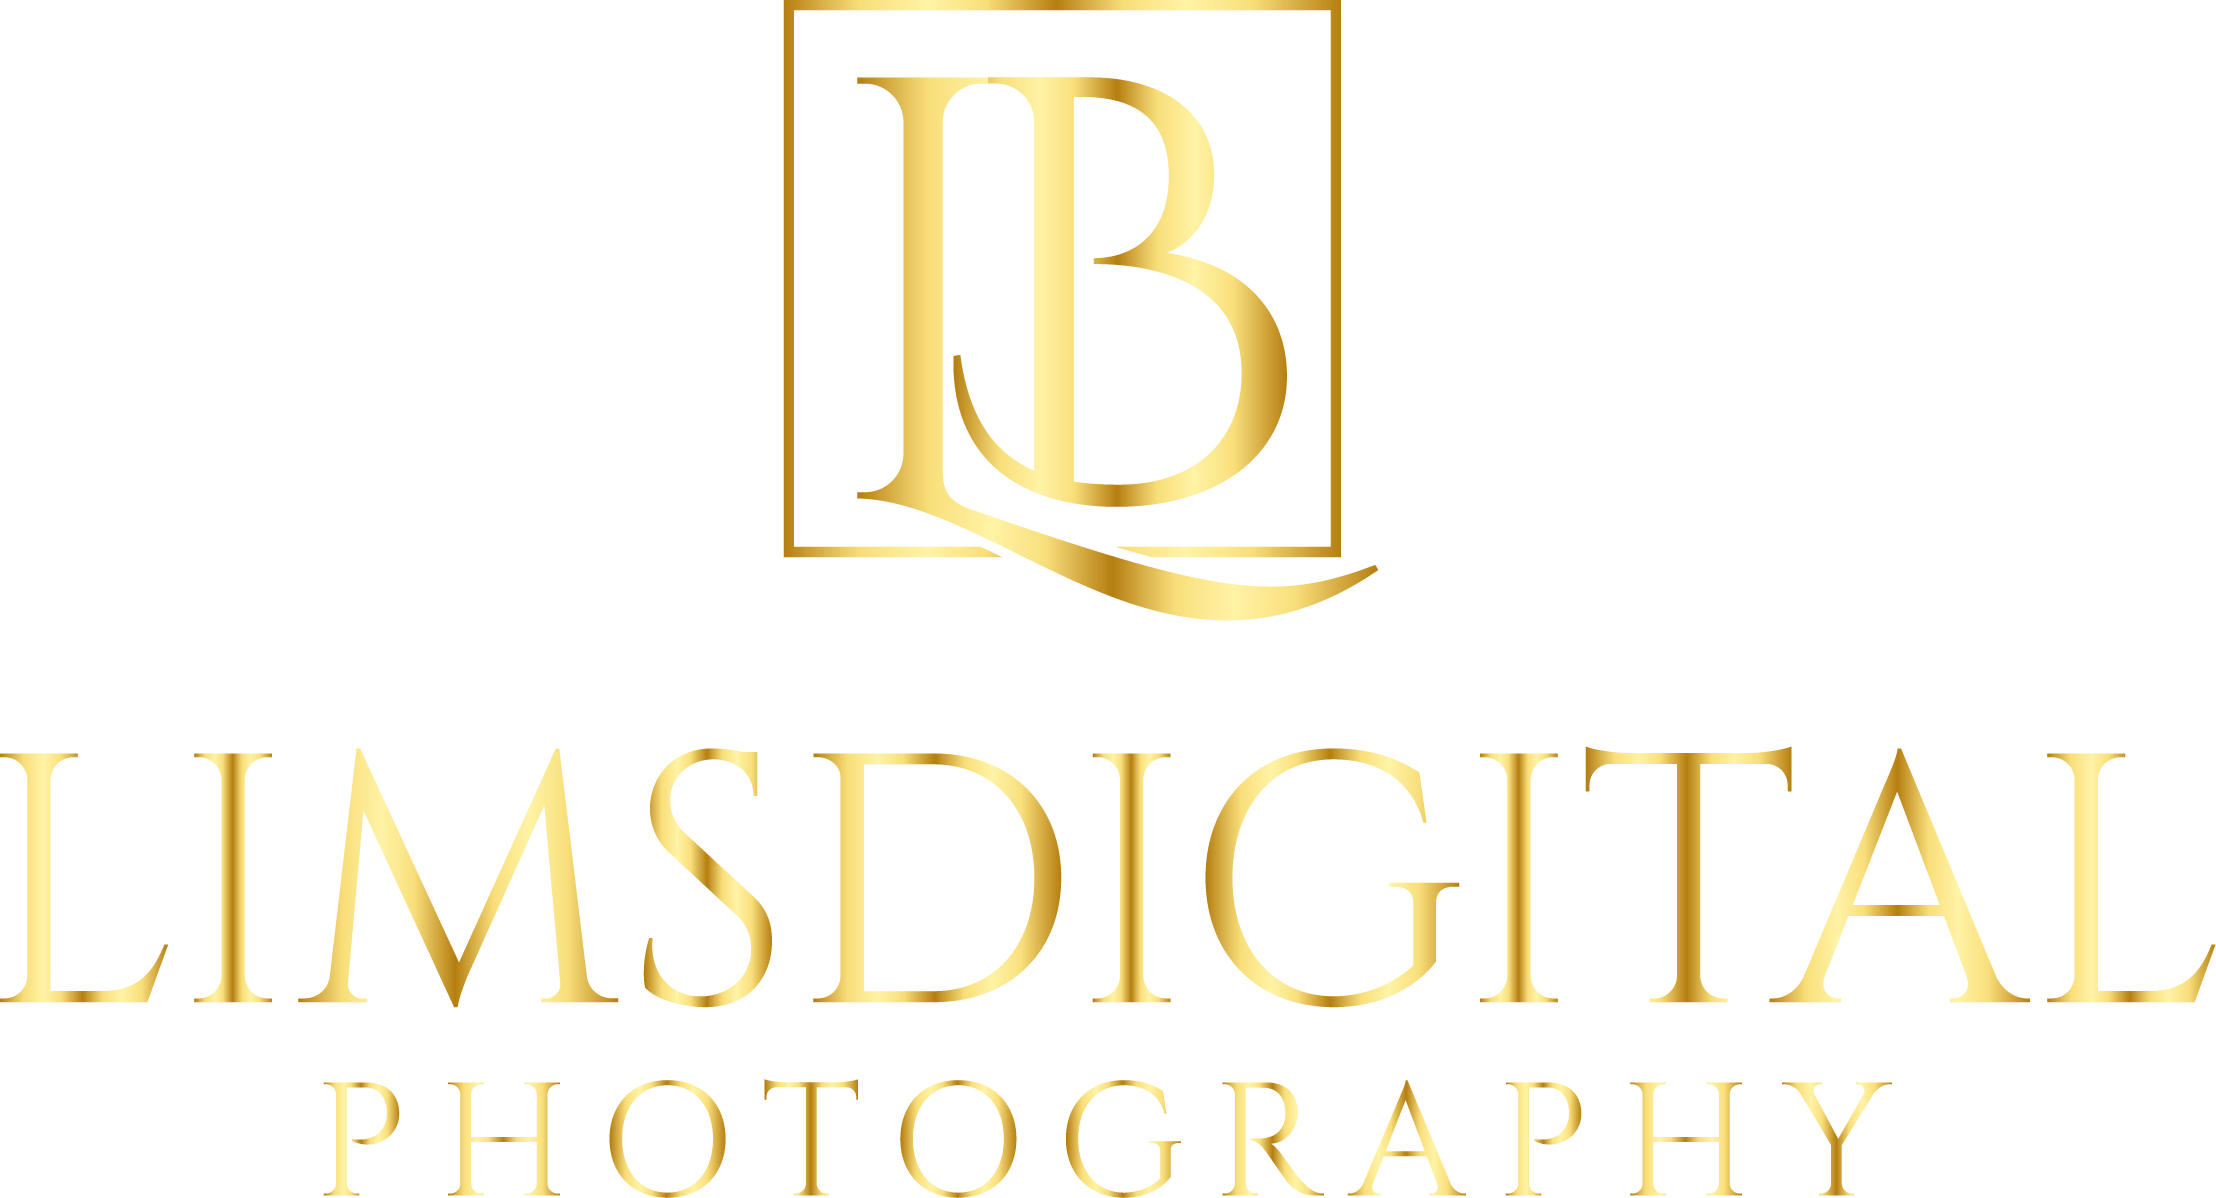 LimsDigitalPhotography